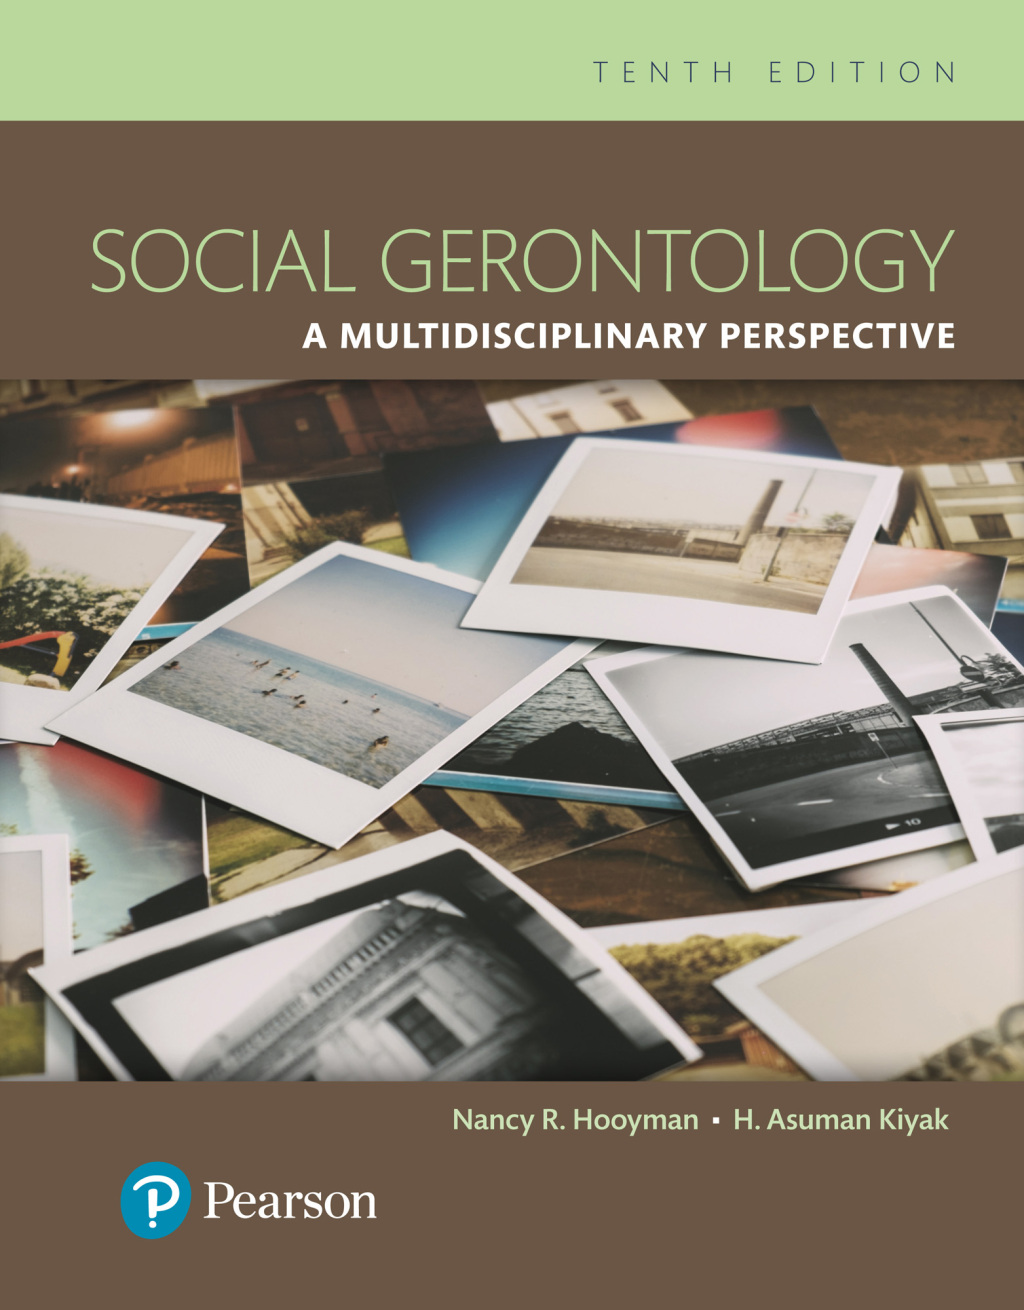 Social Gerontology - 10th Edition (eBook Rental)